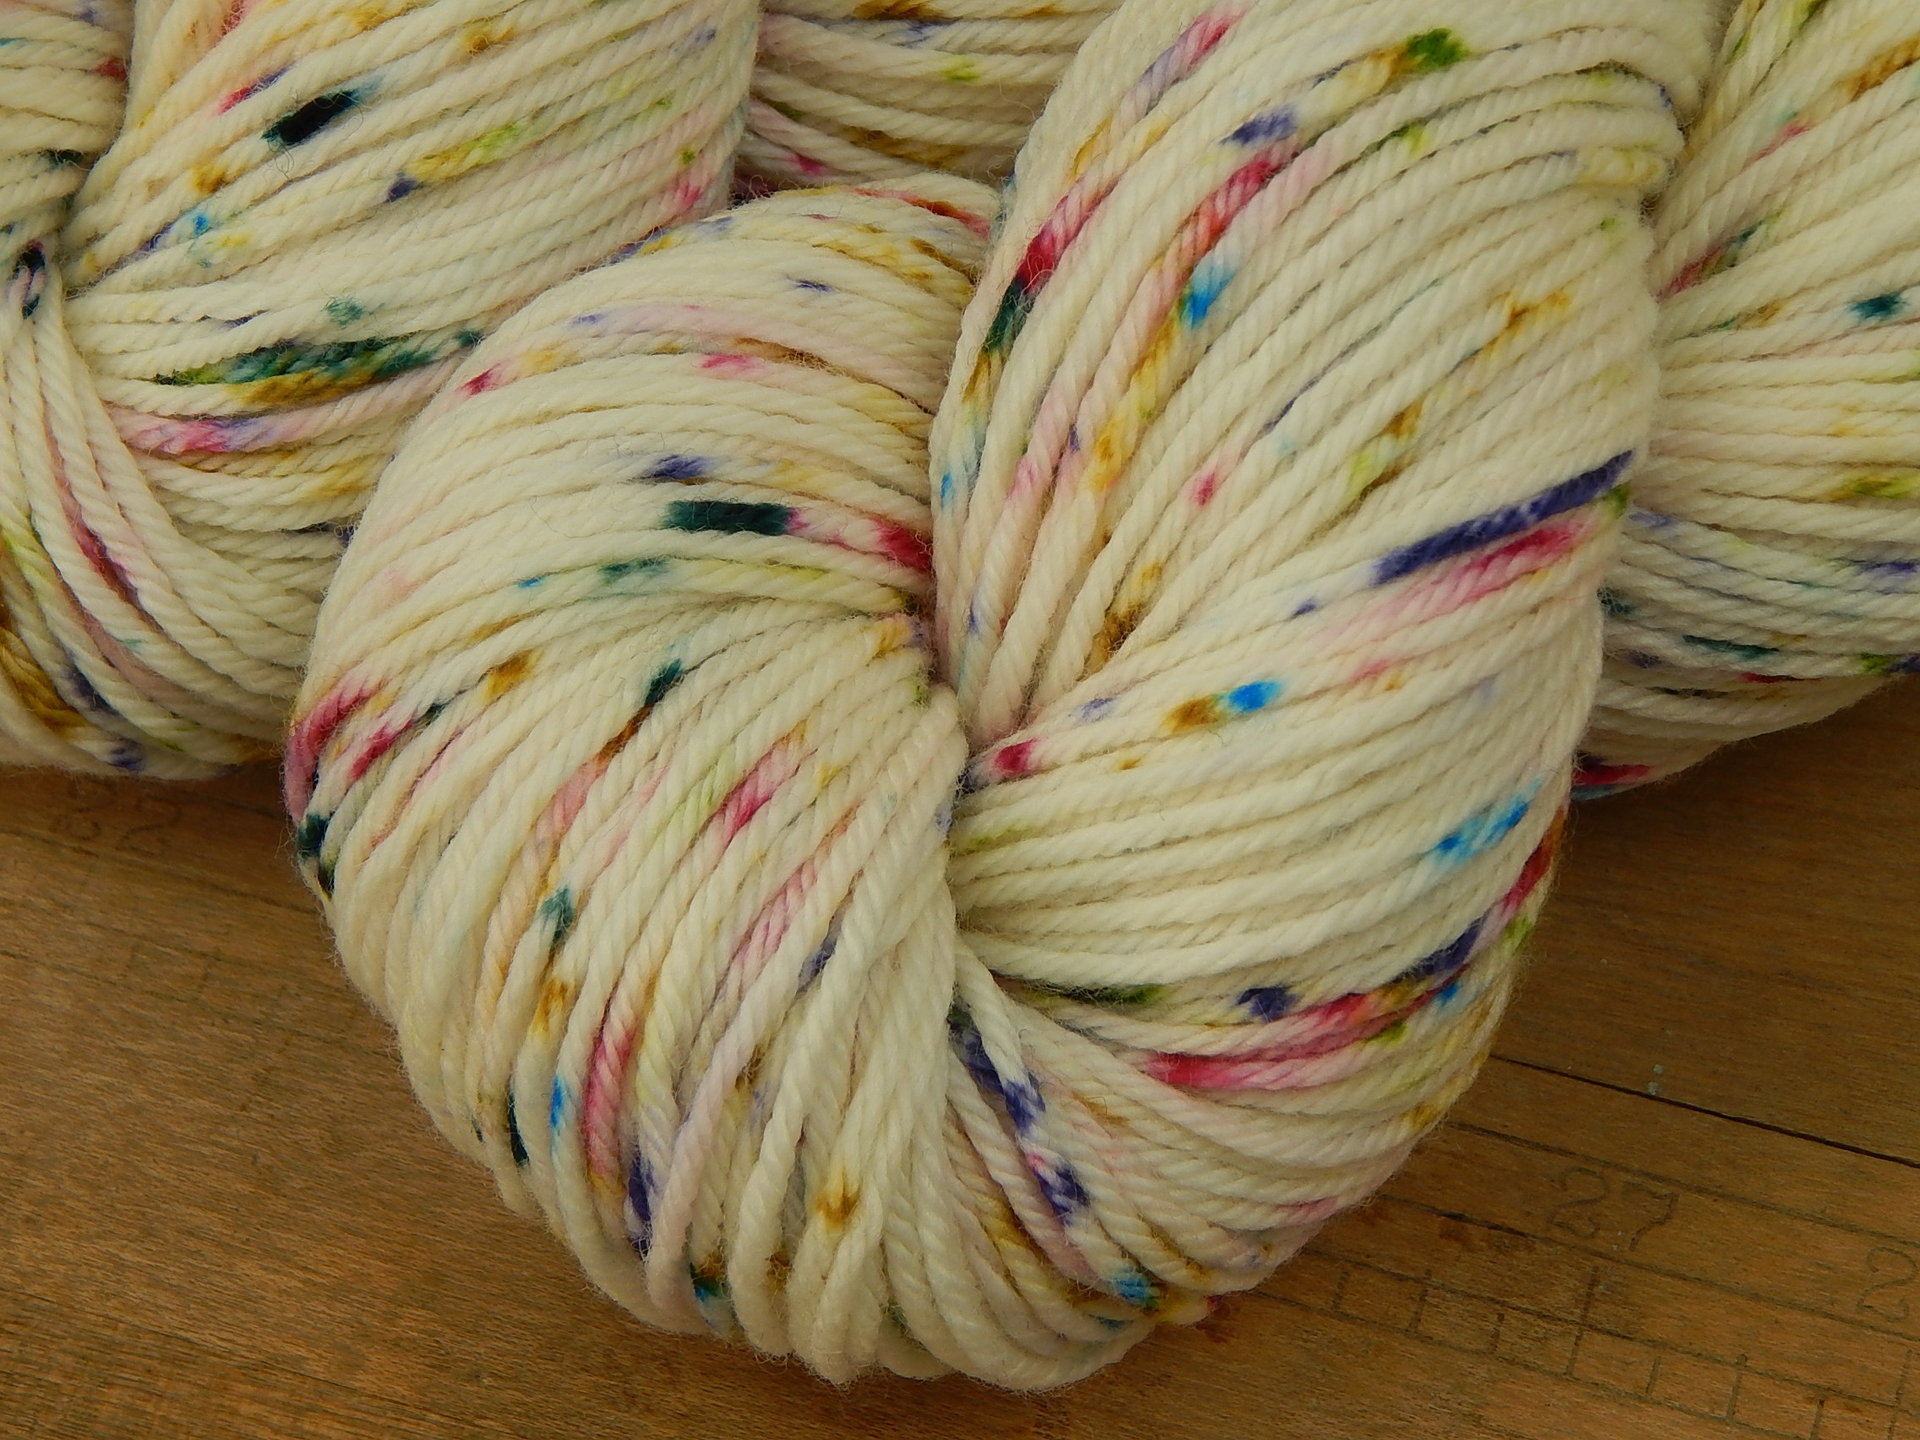 Worsted Weight Hand Dyed Yarn, 100% Superwash Merino Wool - Potluck Confetti - Indie Dyer Off White Rainbow Speckled Cream Knitting Yarn